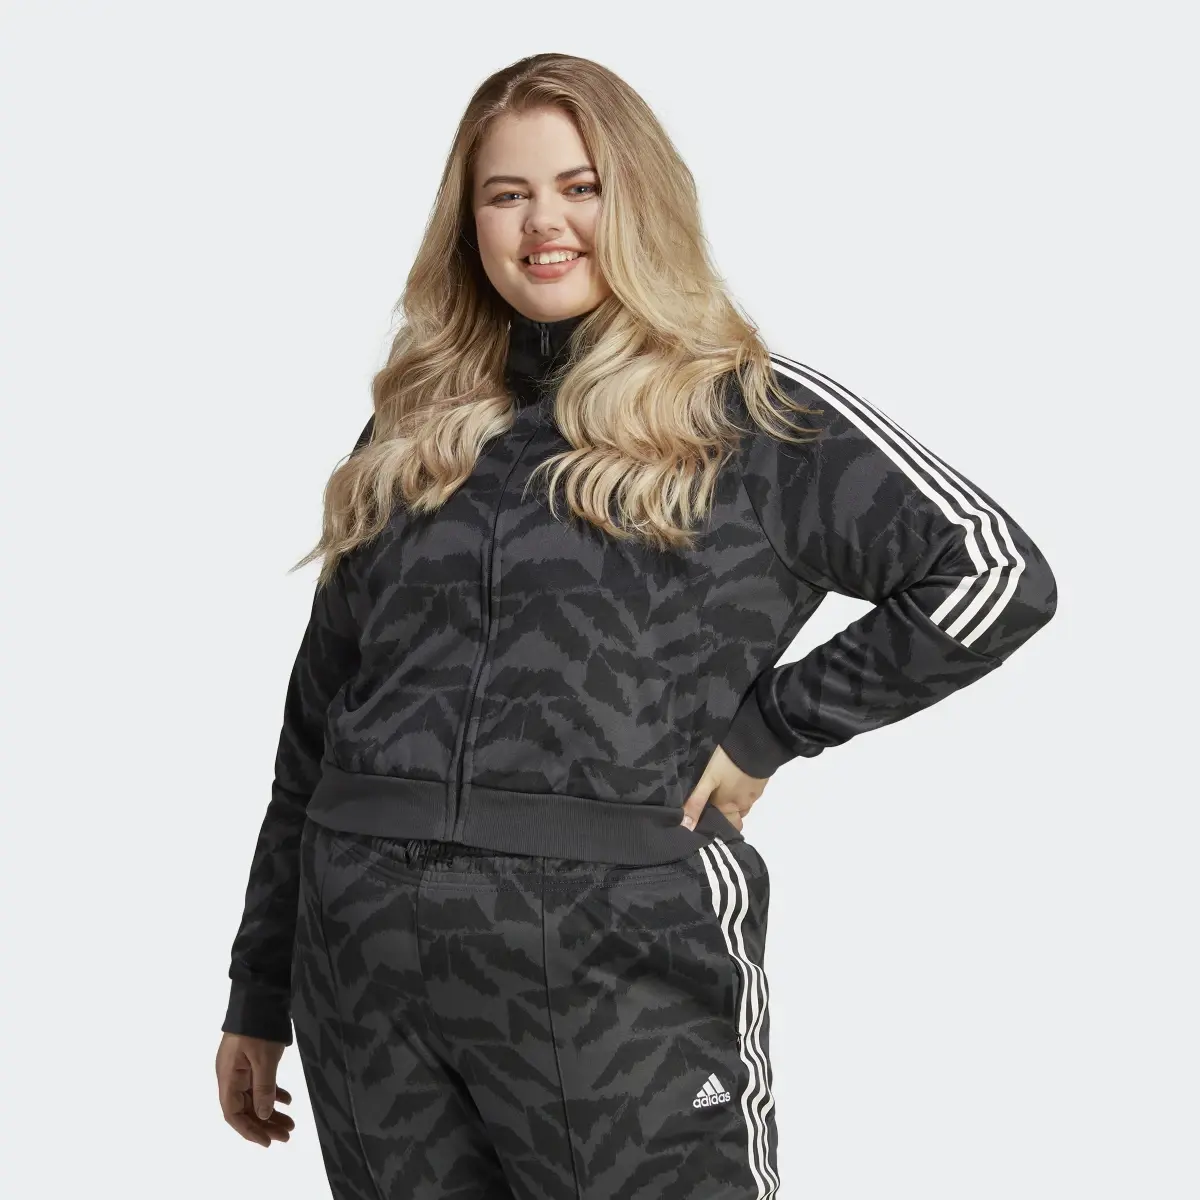 Adidas Tiro Suit Up Lifestyle Trainingsjacke – Große Größen. 2